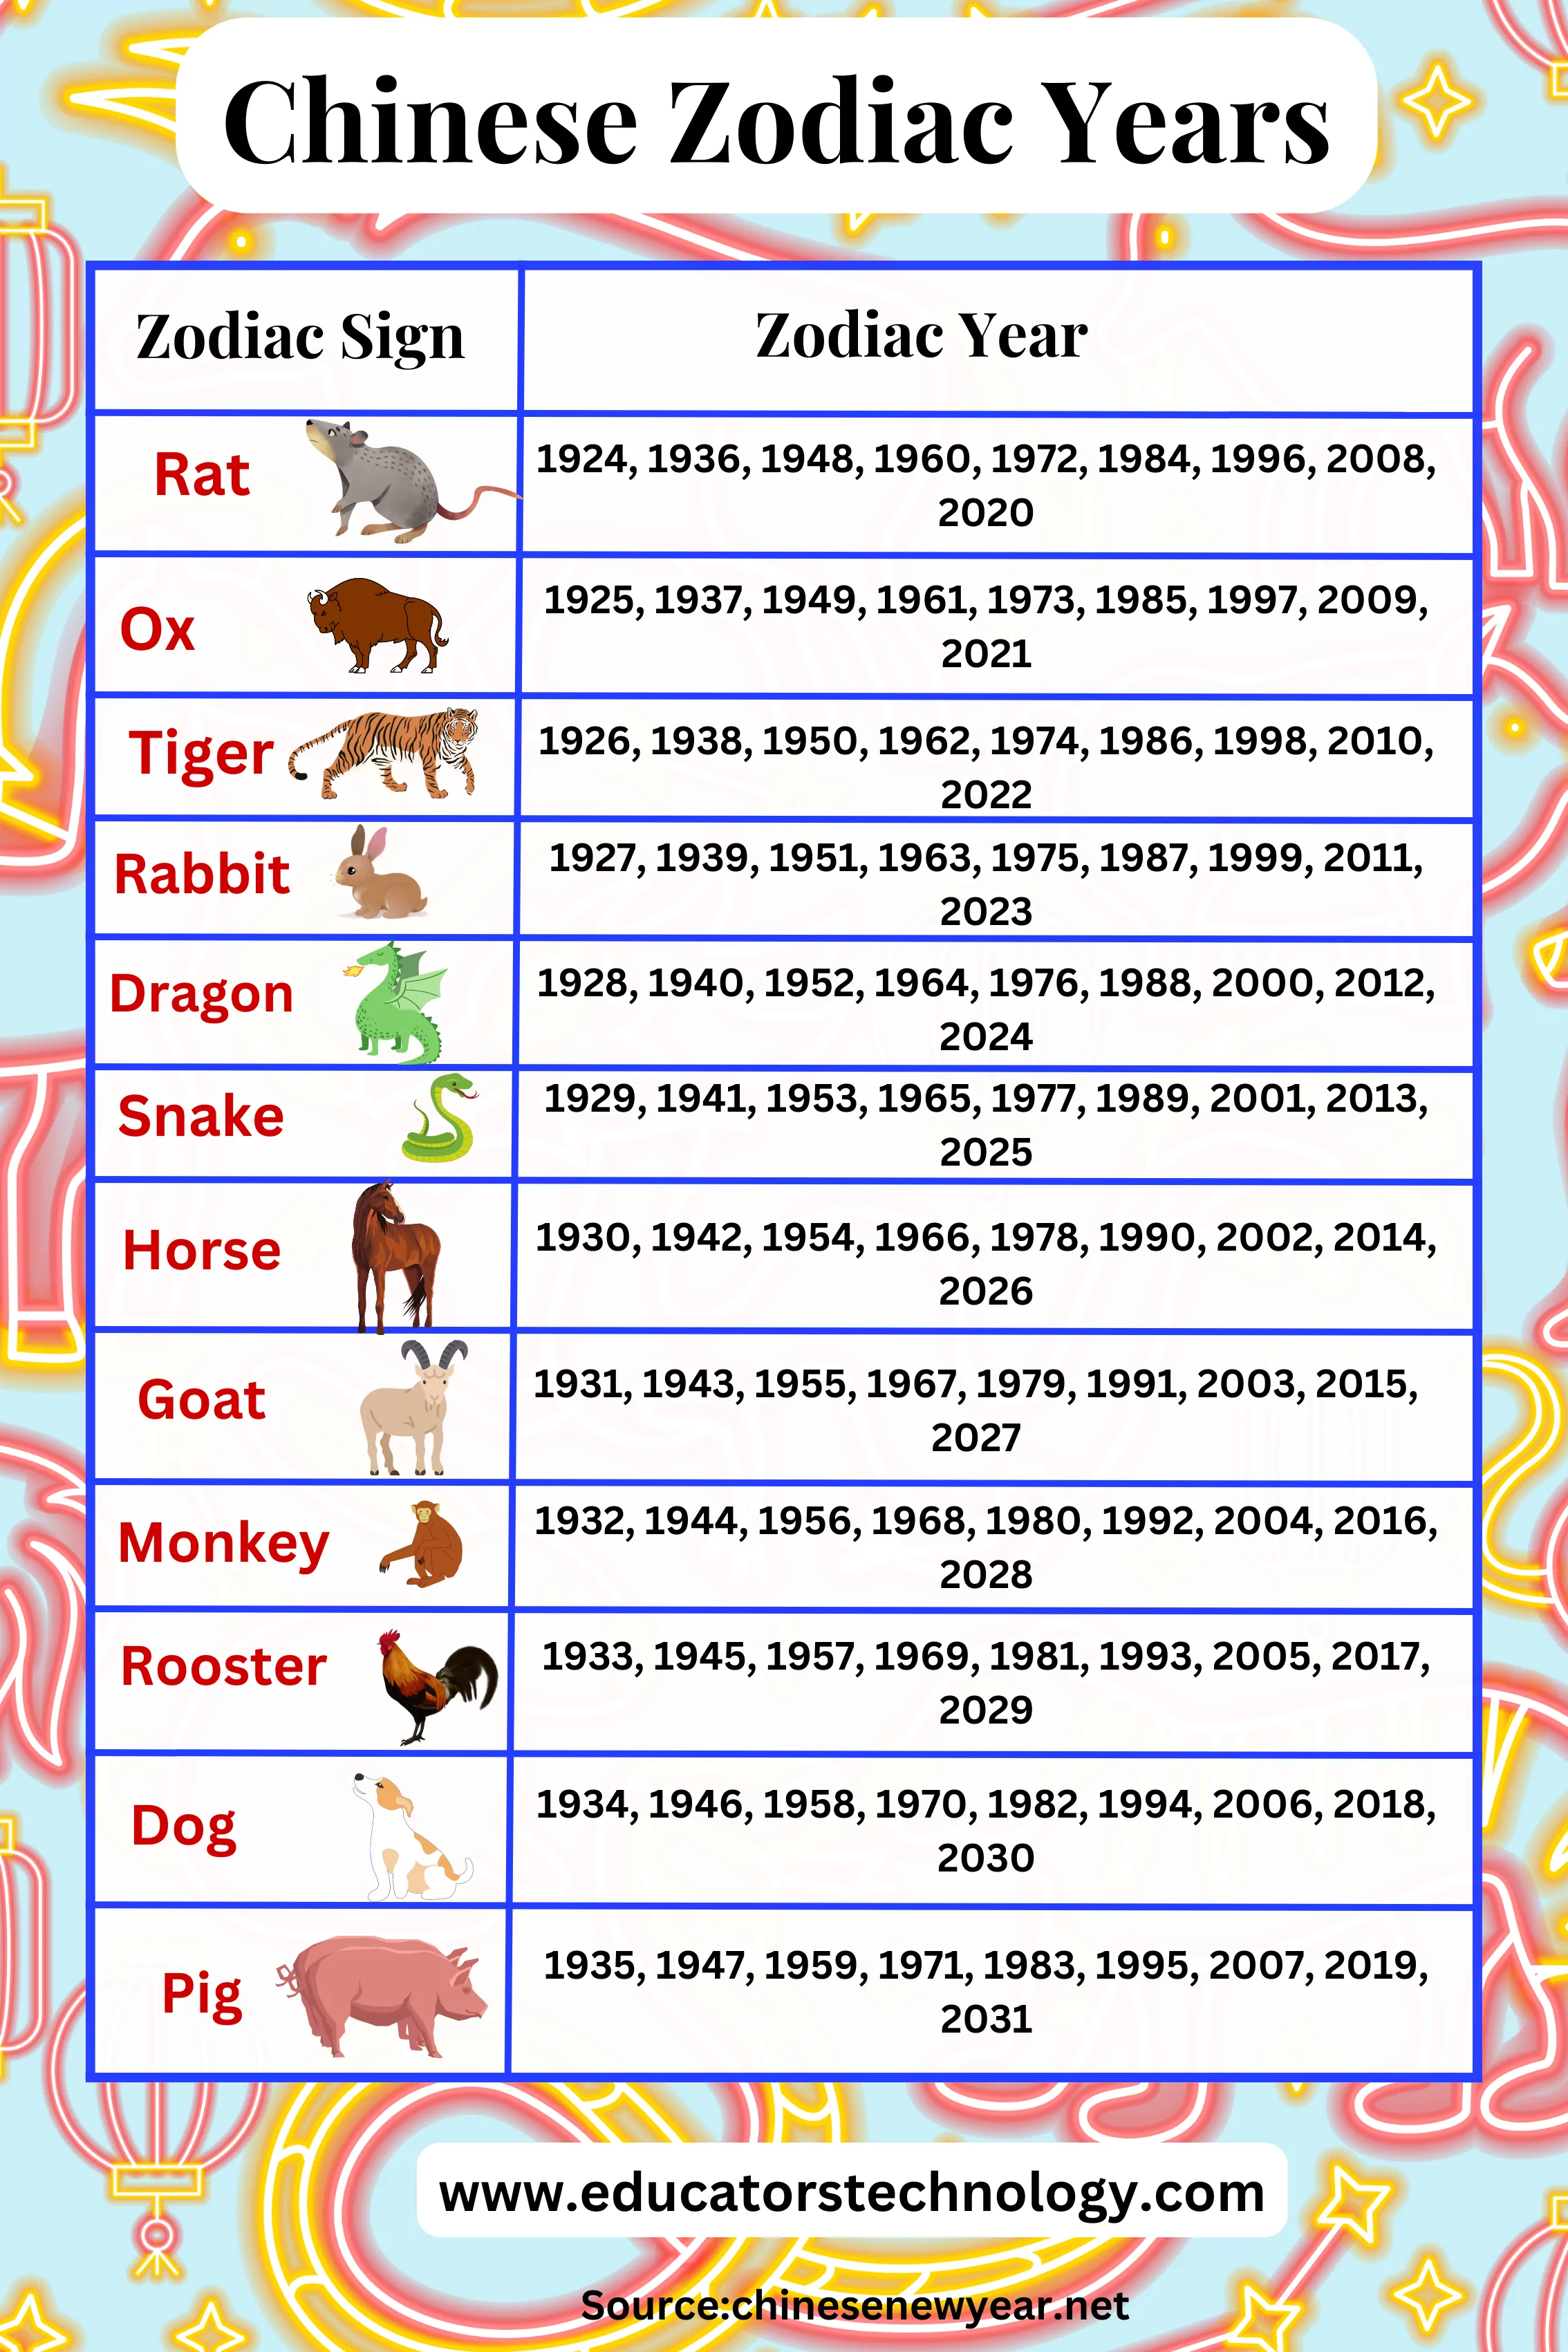 Lunar New Year 2024 - Animal, Dates & Celebrations